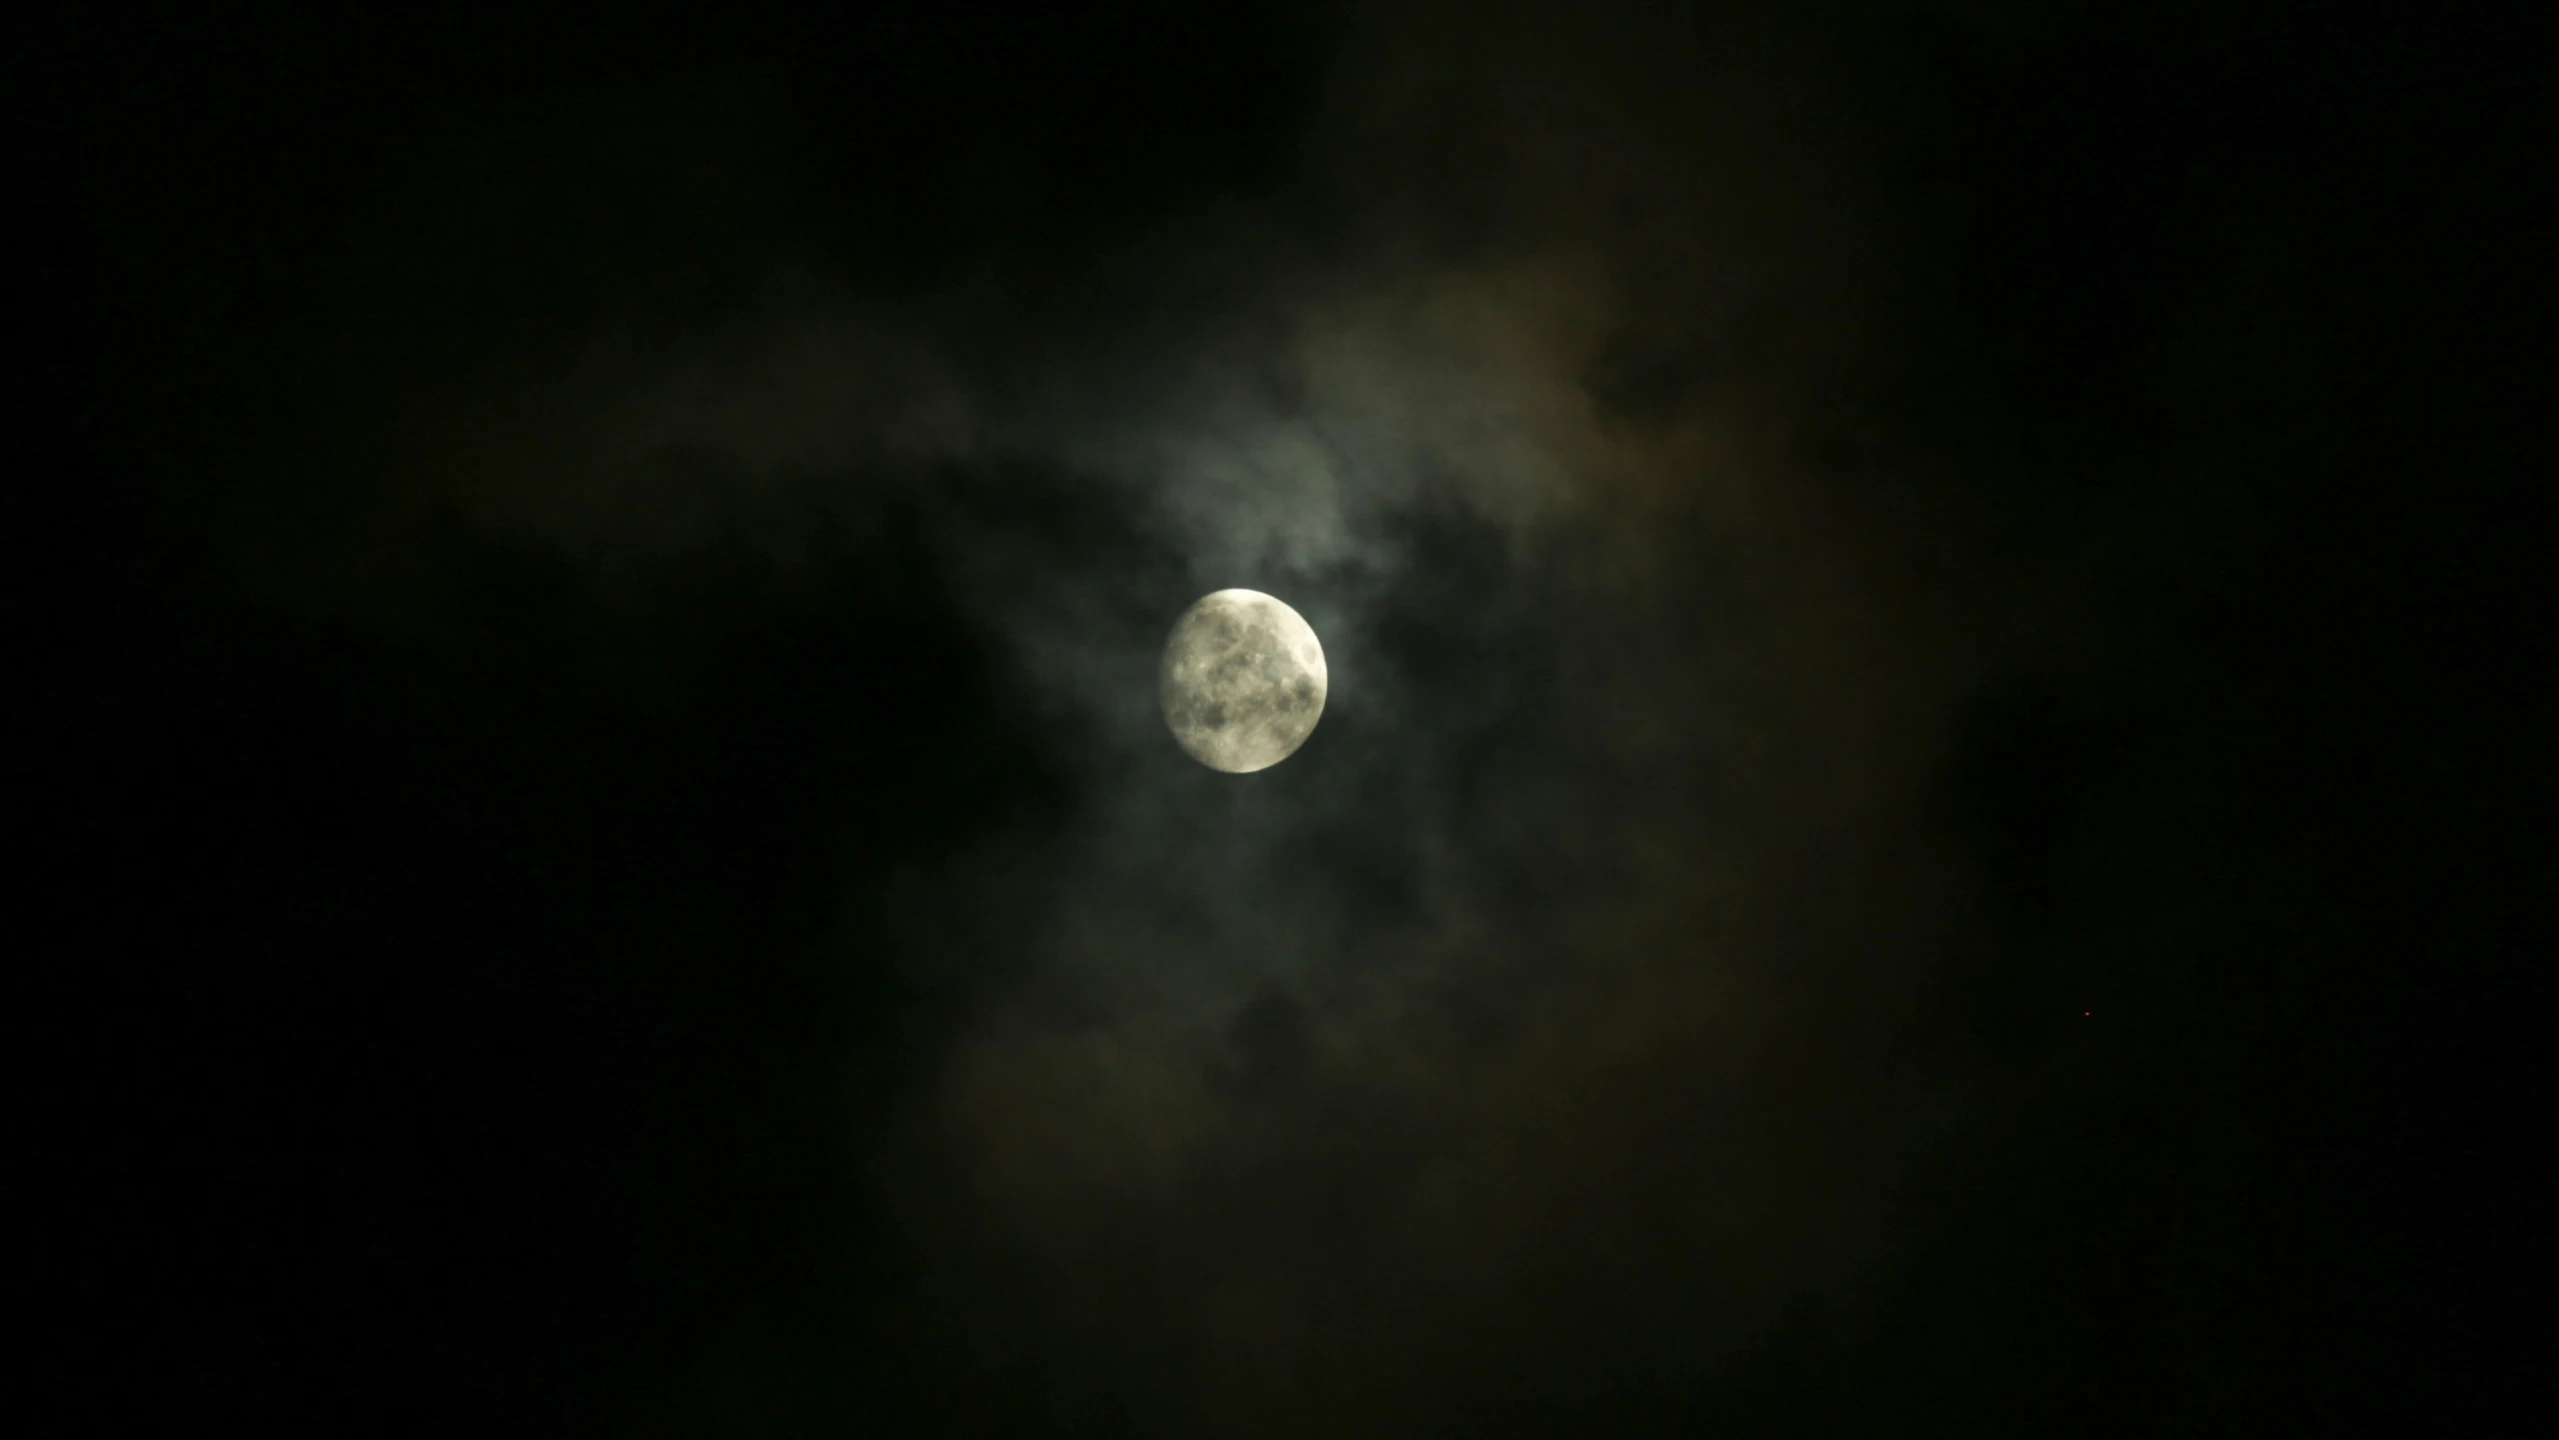 the moon shining through the dark clouds